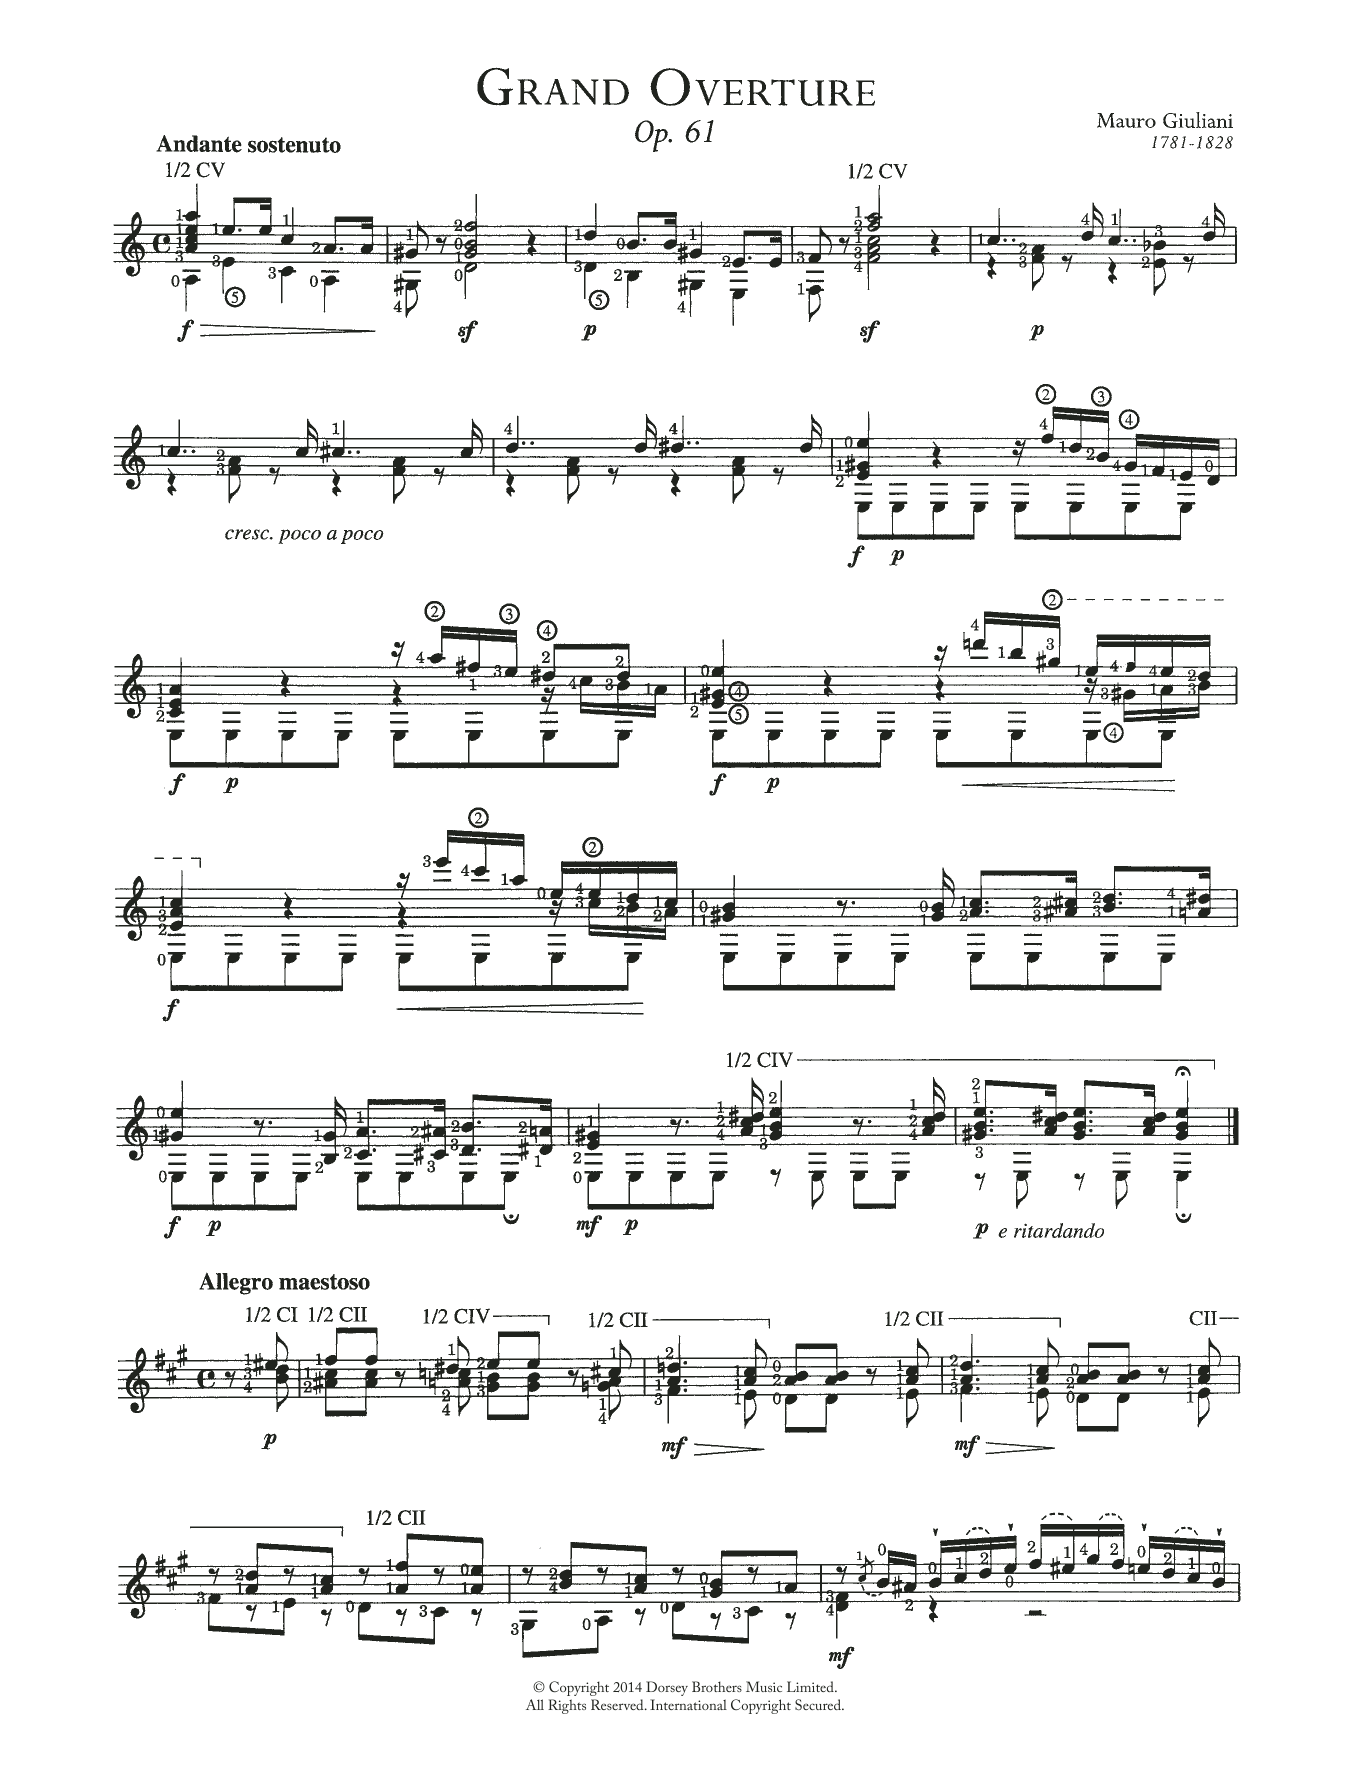 Download Mauro Giuliani Grande Overture Op. 61 Sheet Music